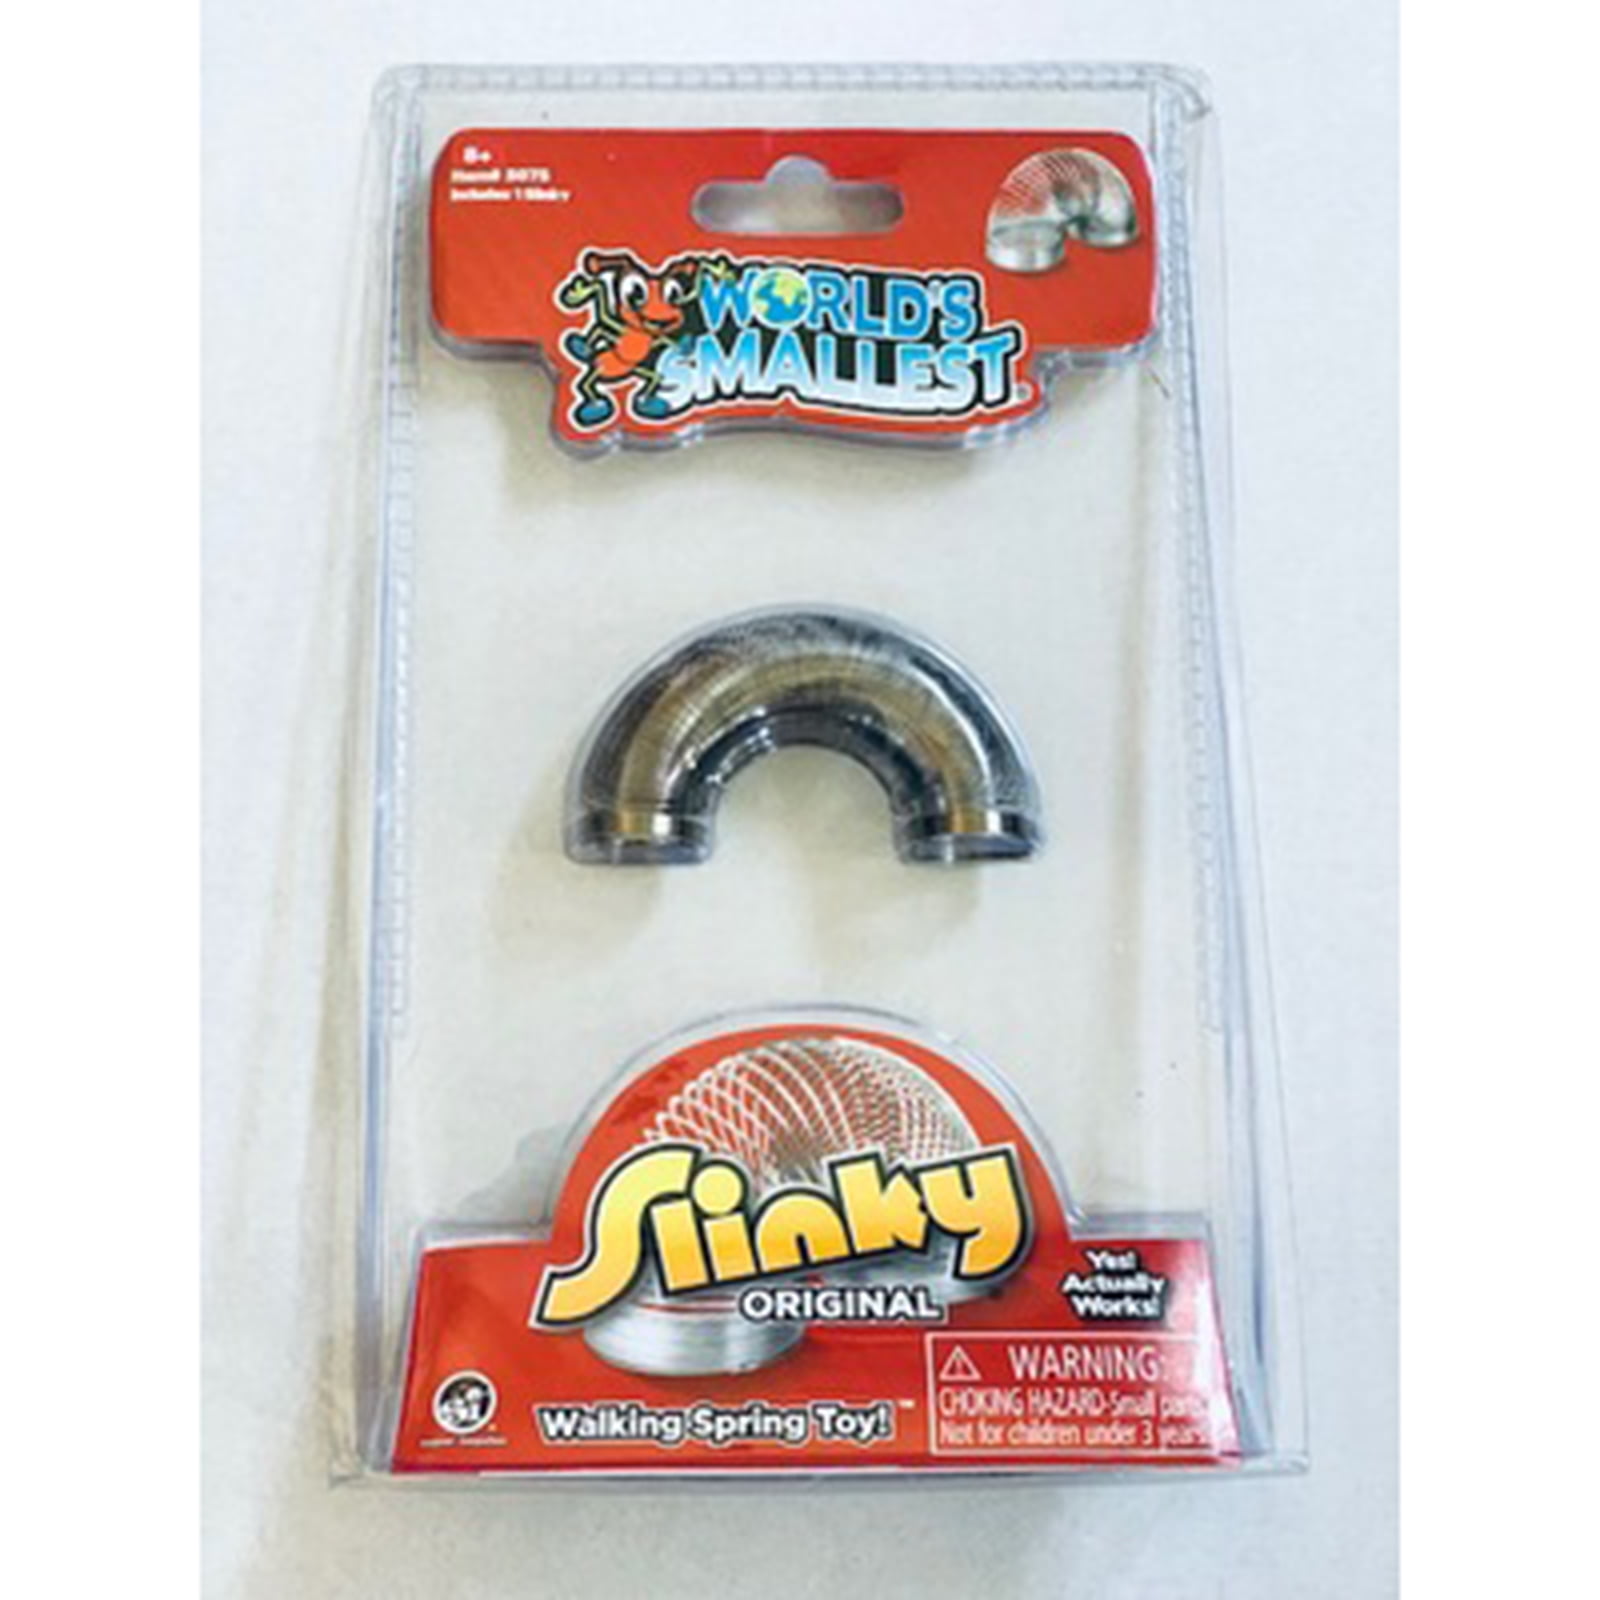 Original Slinky Metal Walking Spring Toy in Collectible Retro Black/Brown Box 